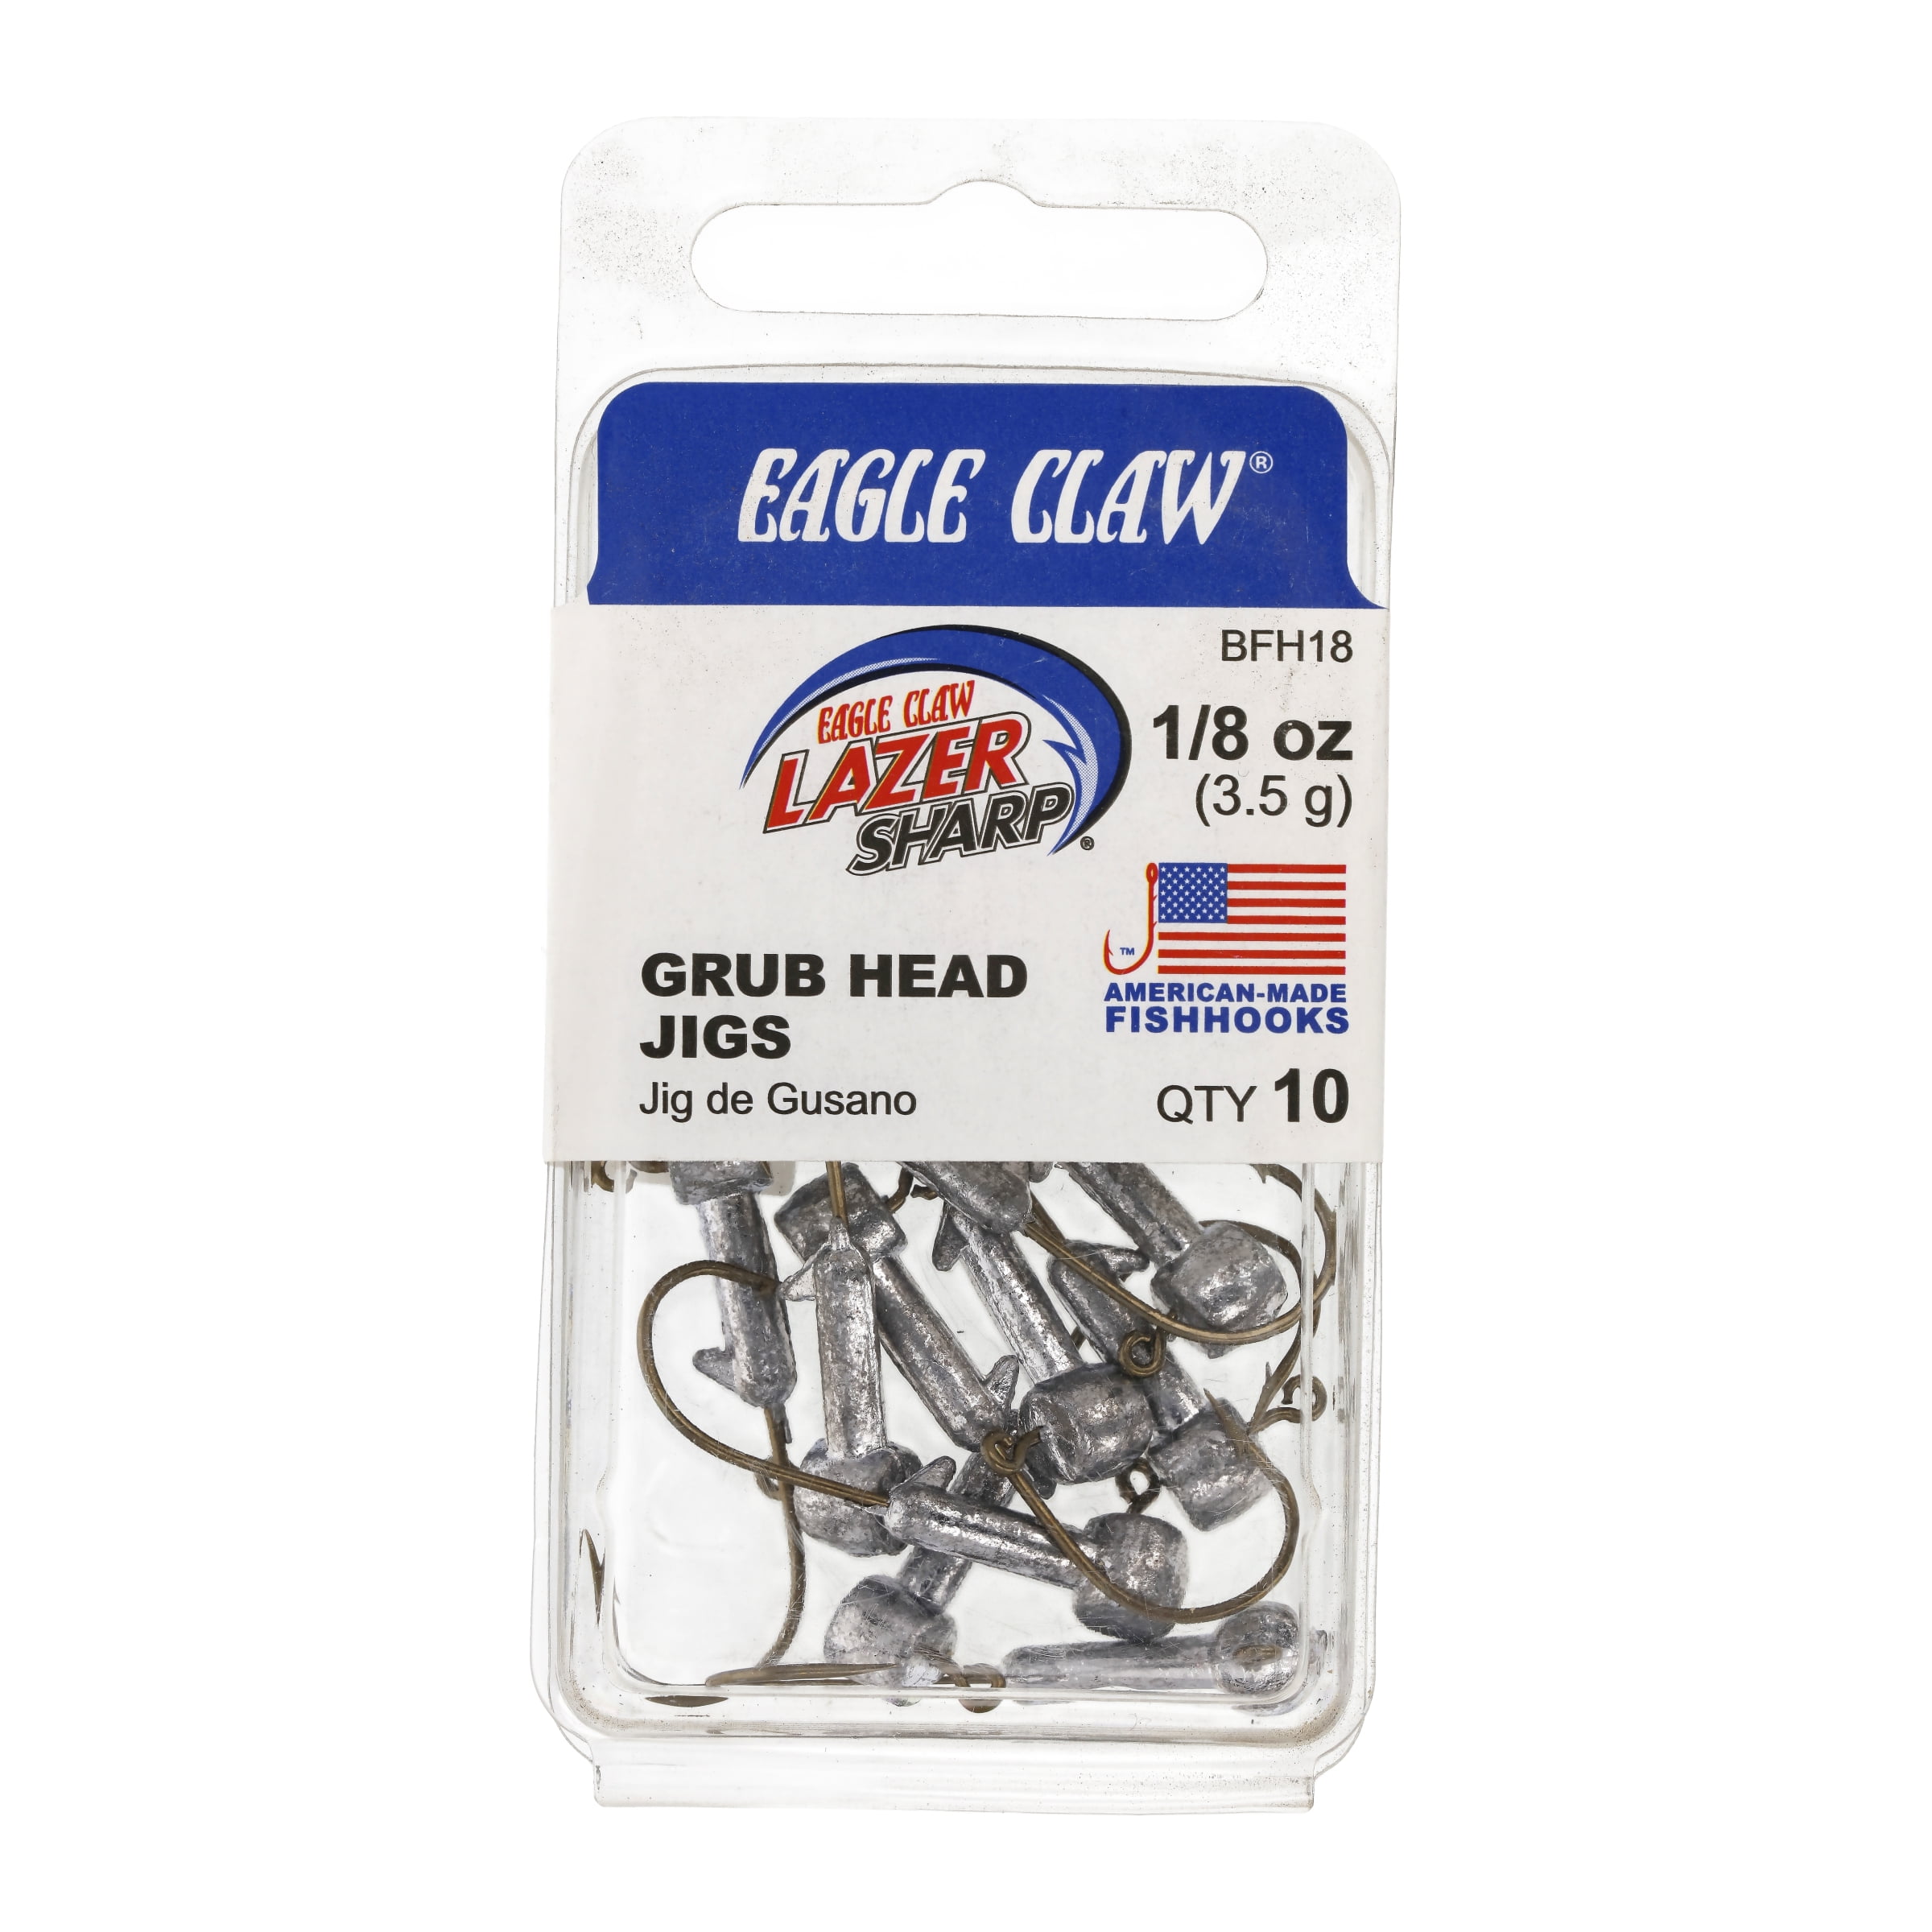 Eagle Claw Grub Jig Head Fishing Hook, Unpainted, 1/8 oz., BFH18 